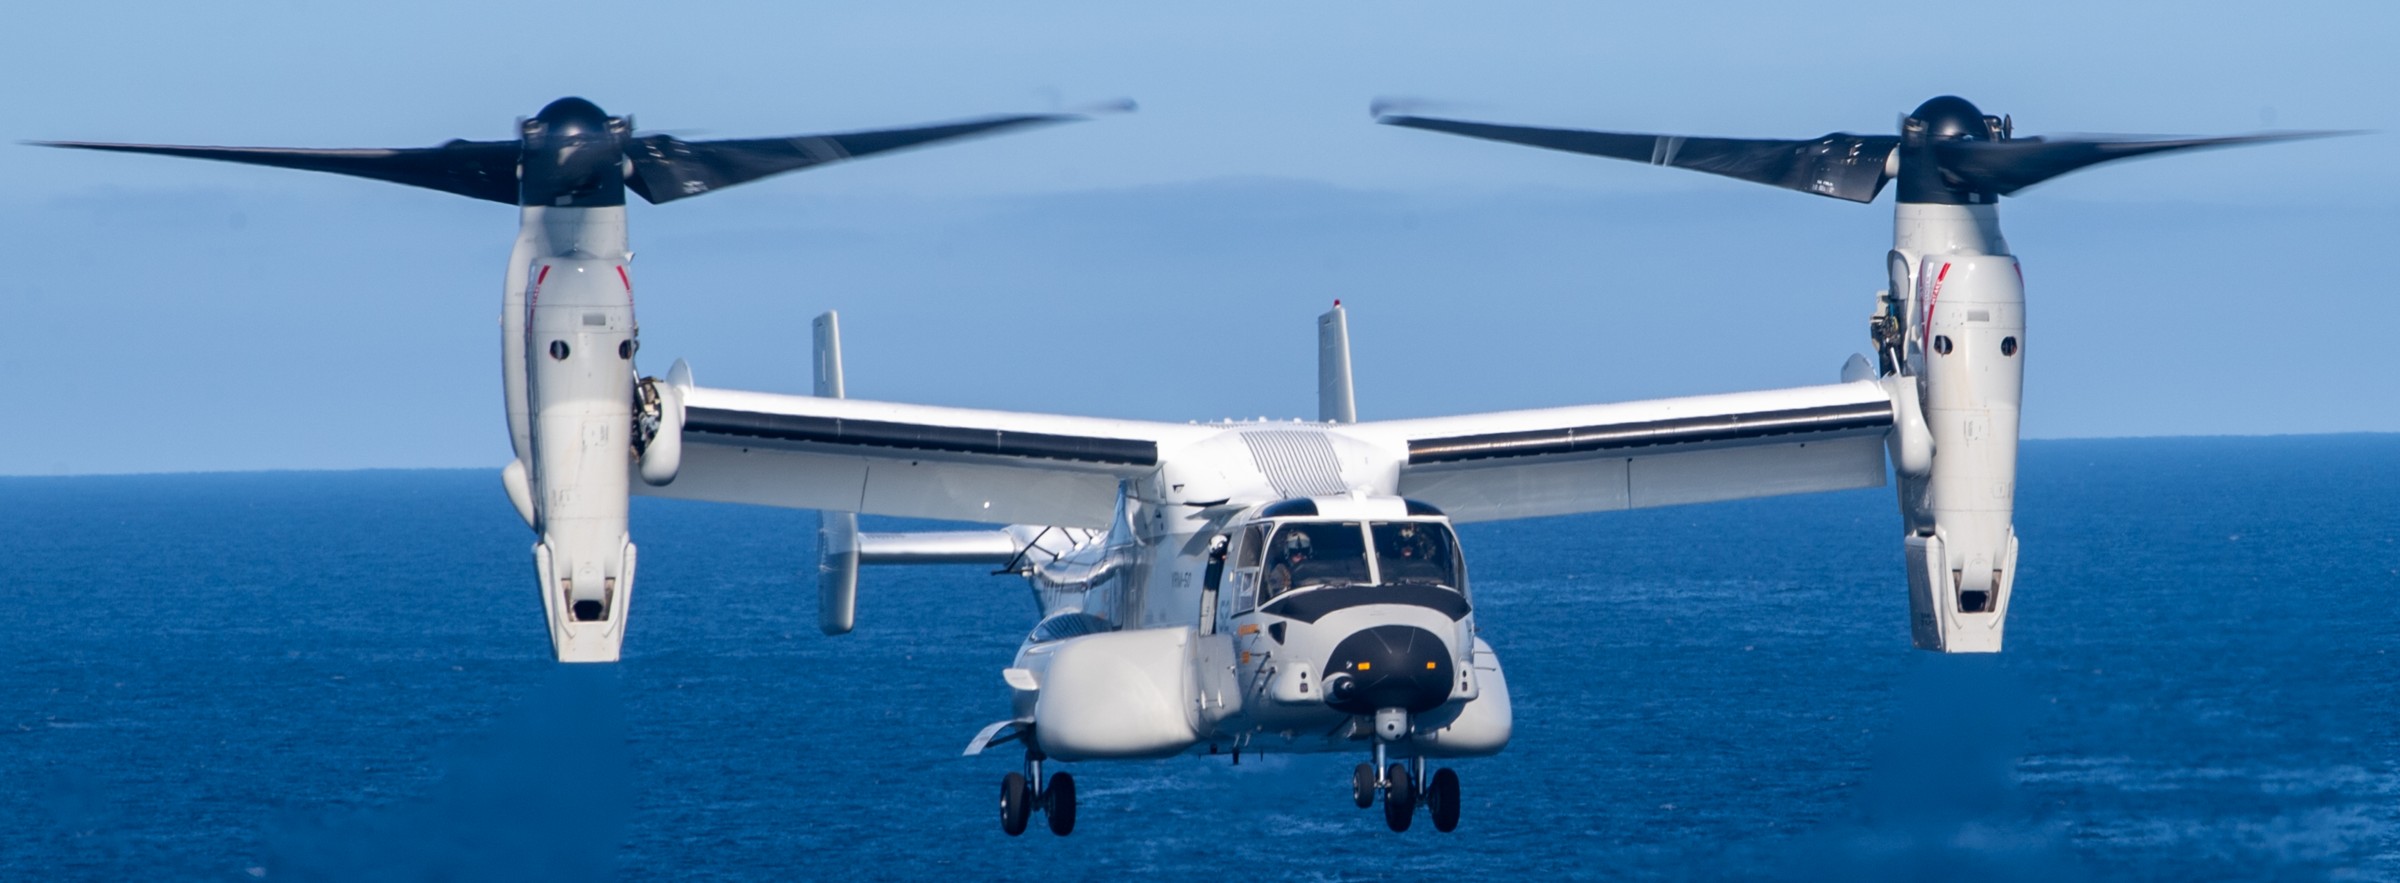 vrm-50 sun hawks fleet logistics multi mission squadron us navy bell boeing cmv-22b osprey replacement frs uss nimitz cvn-68 18